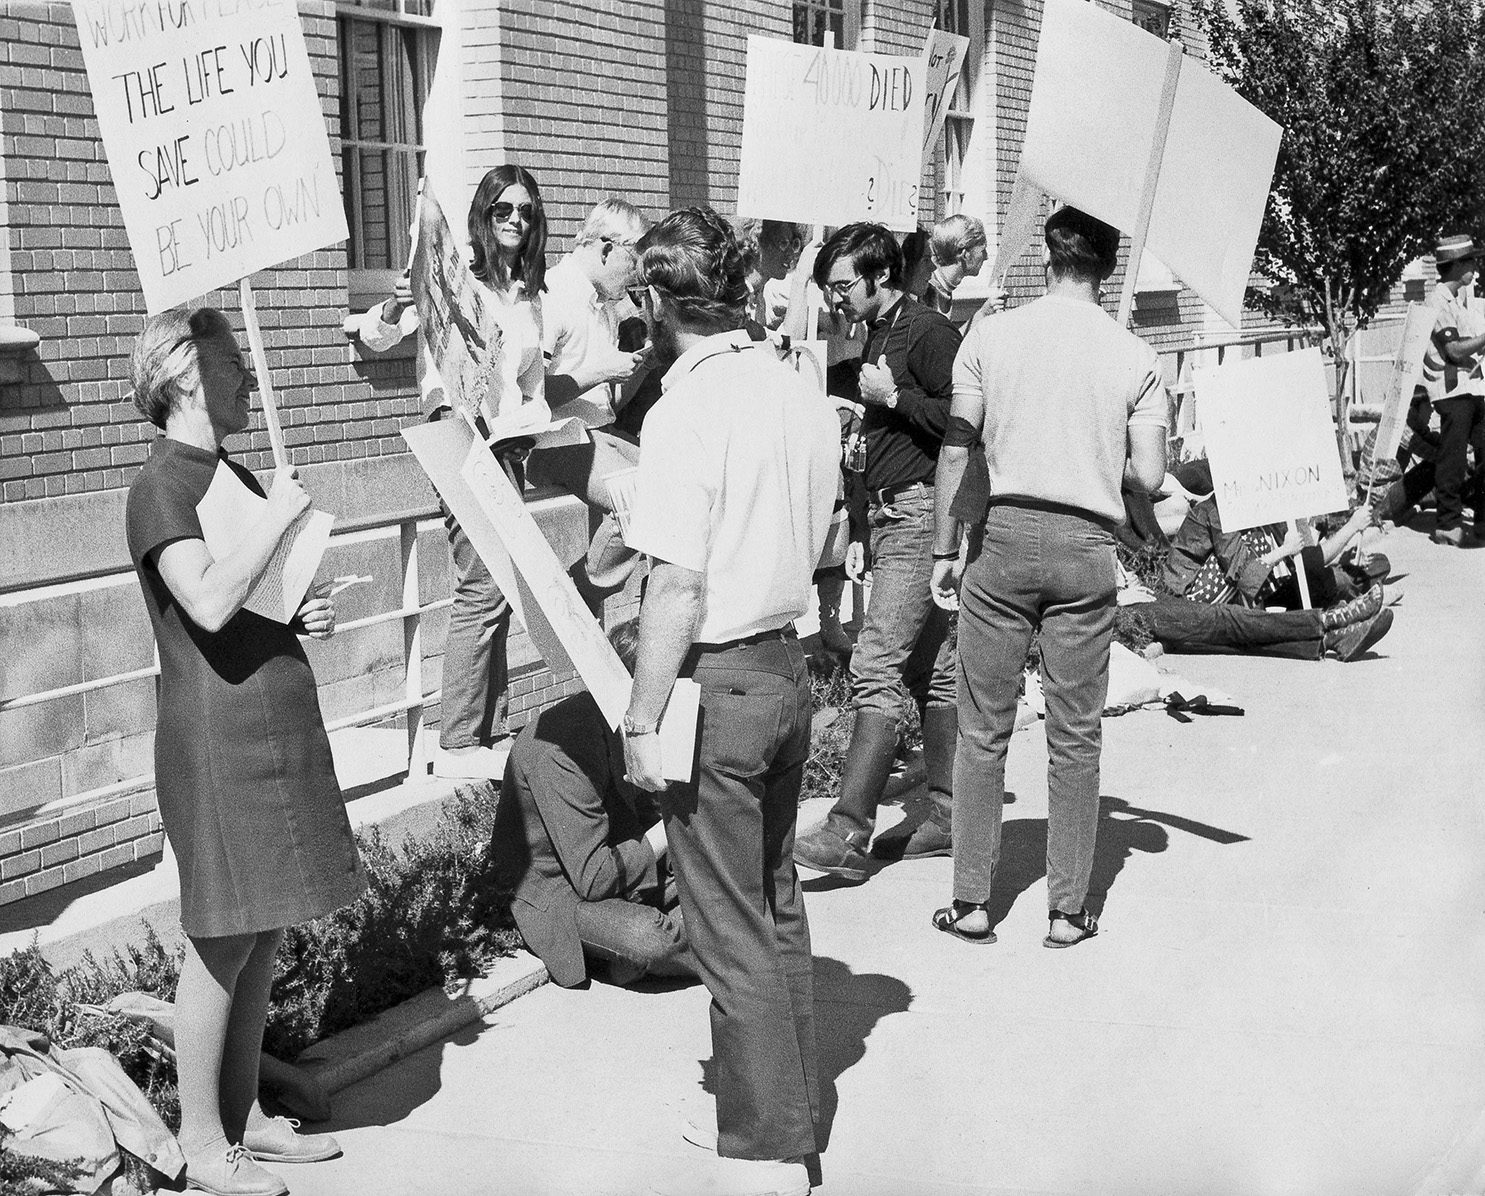 Anti-war protestors